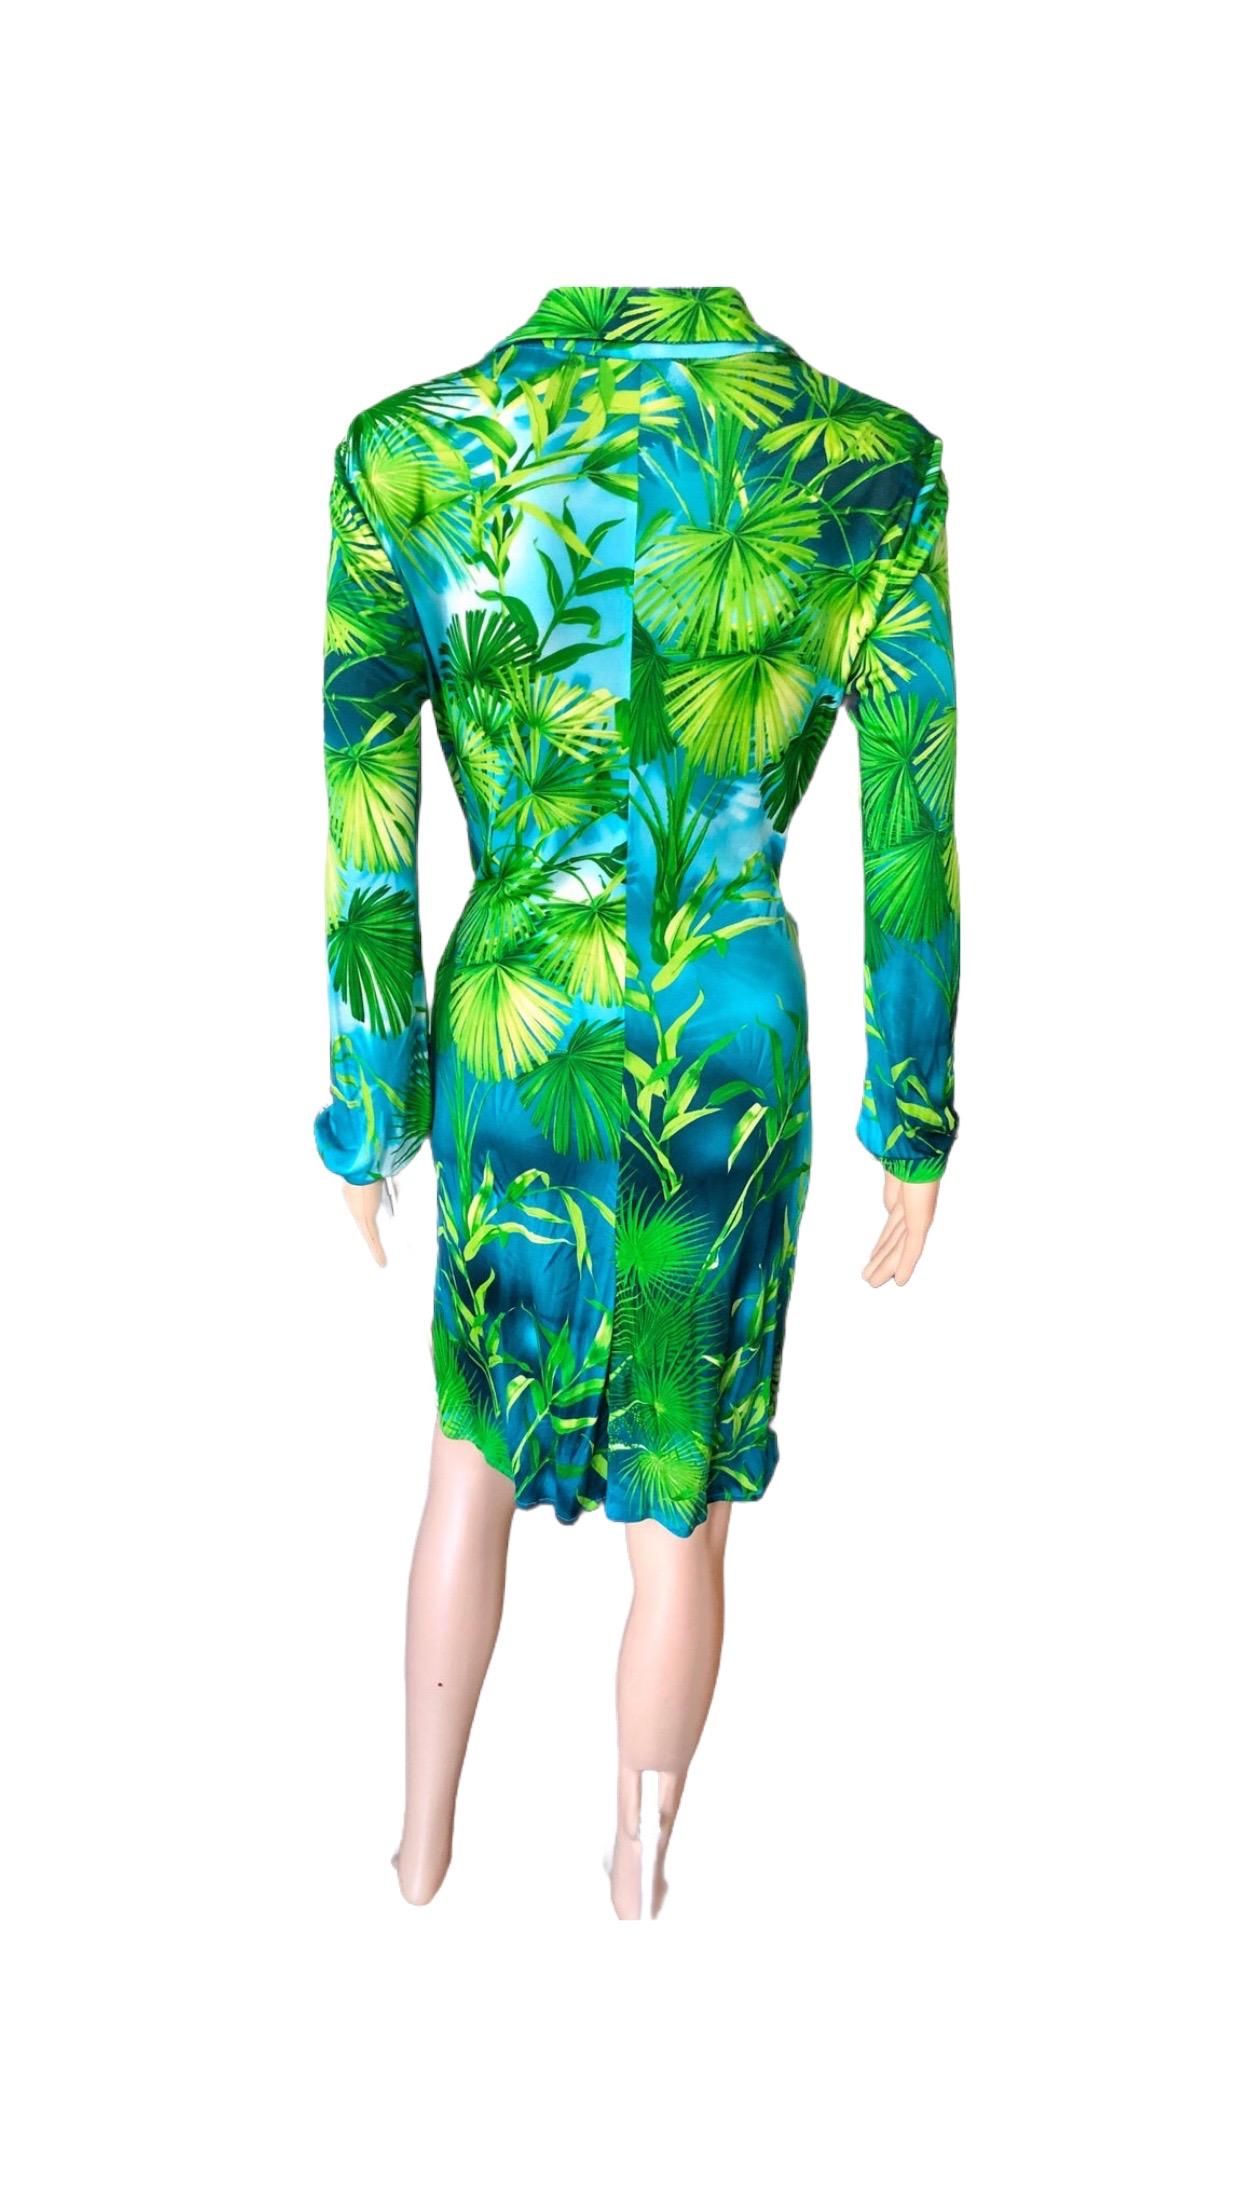 Gianni Versace Runway S/S 2000 Vintage Tropical Print Plunging Neckline Dress 4